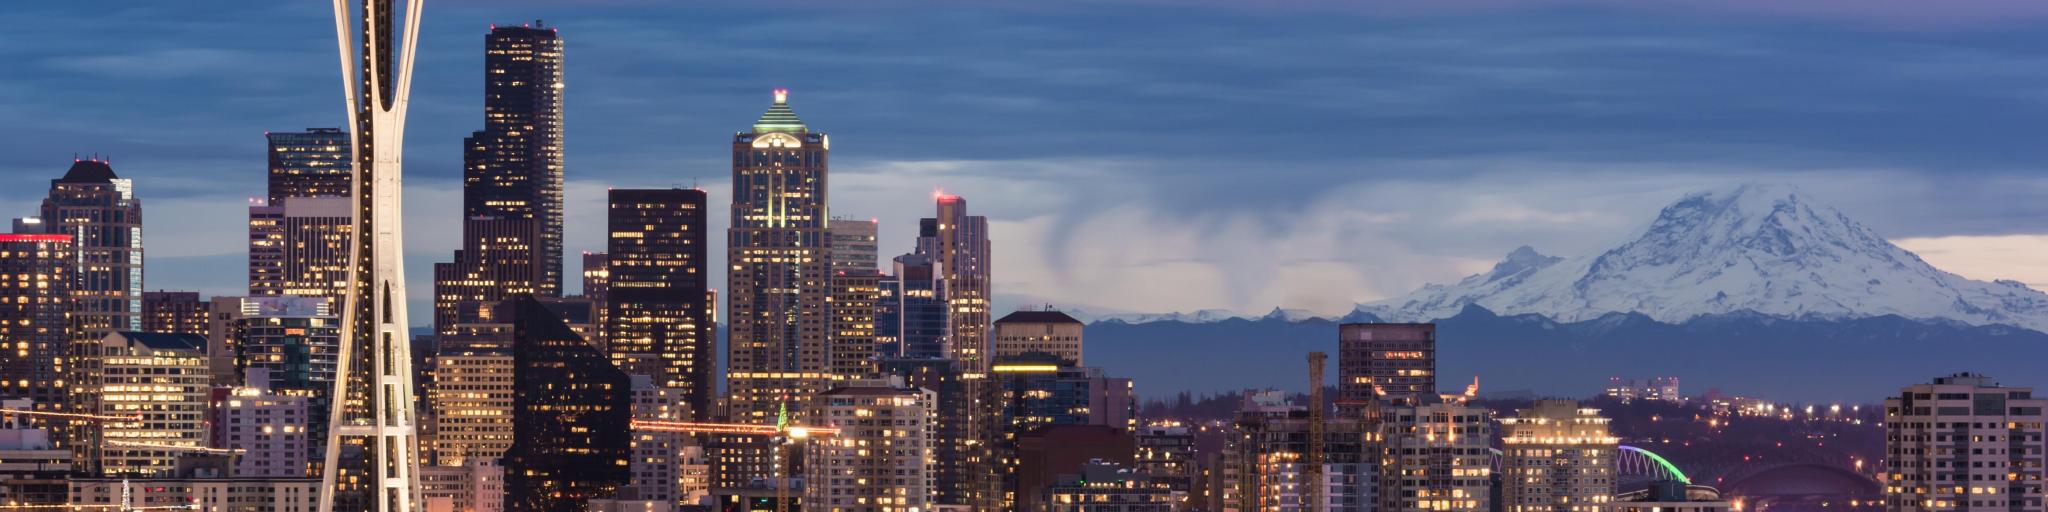 Seattle, Washington, USA skyline at night